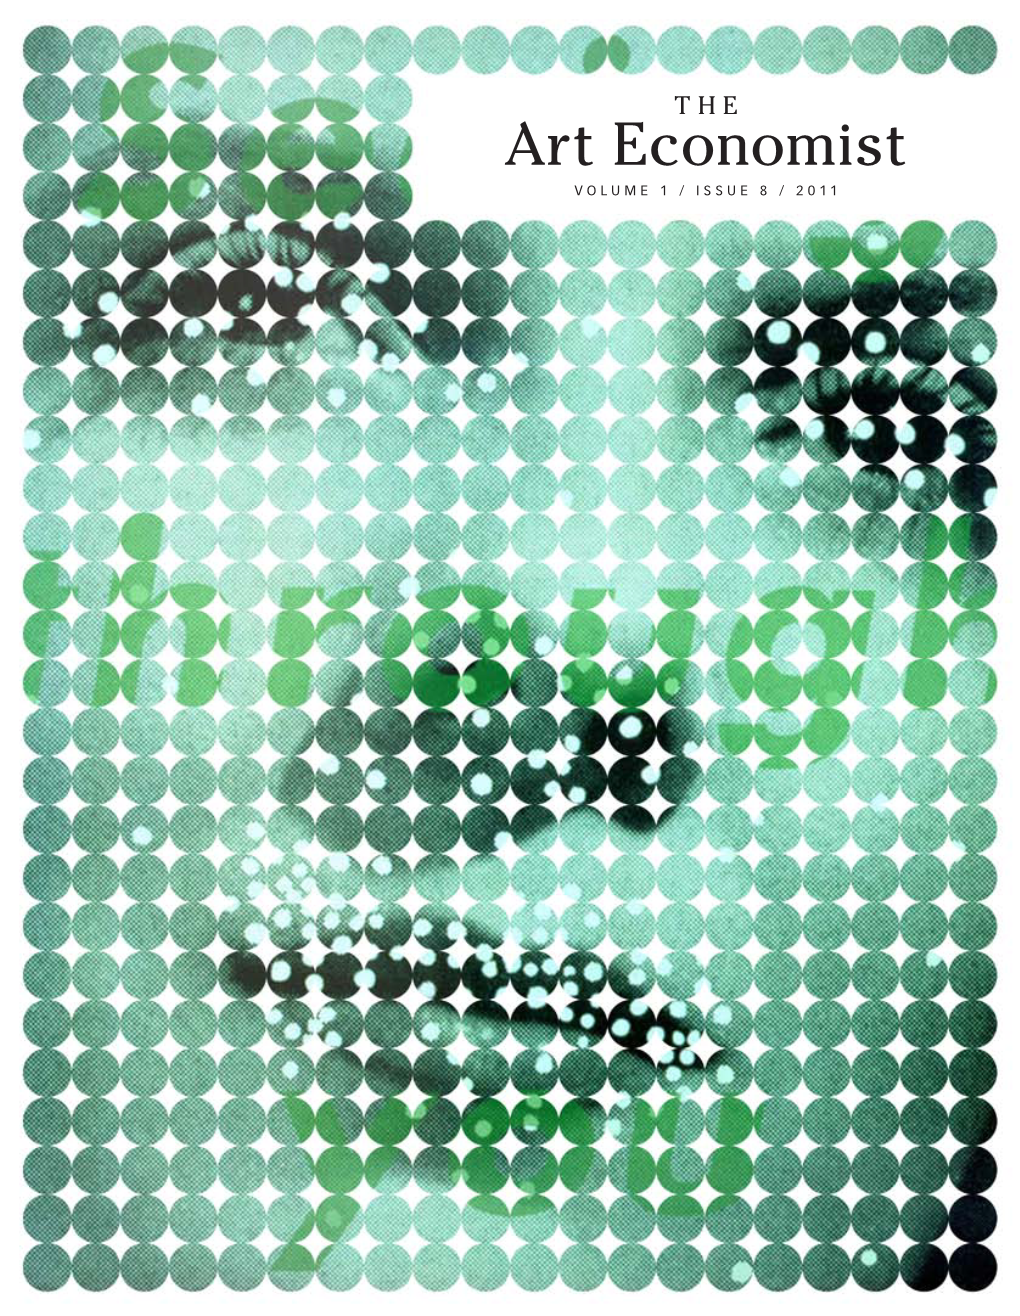 Art Economist VOLUME 1 / ISSUE 8 / 2011 the Art Economist VOLUME 1 / ISSUE 8 / 2011